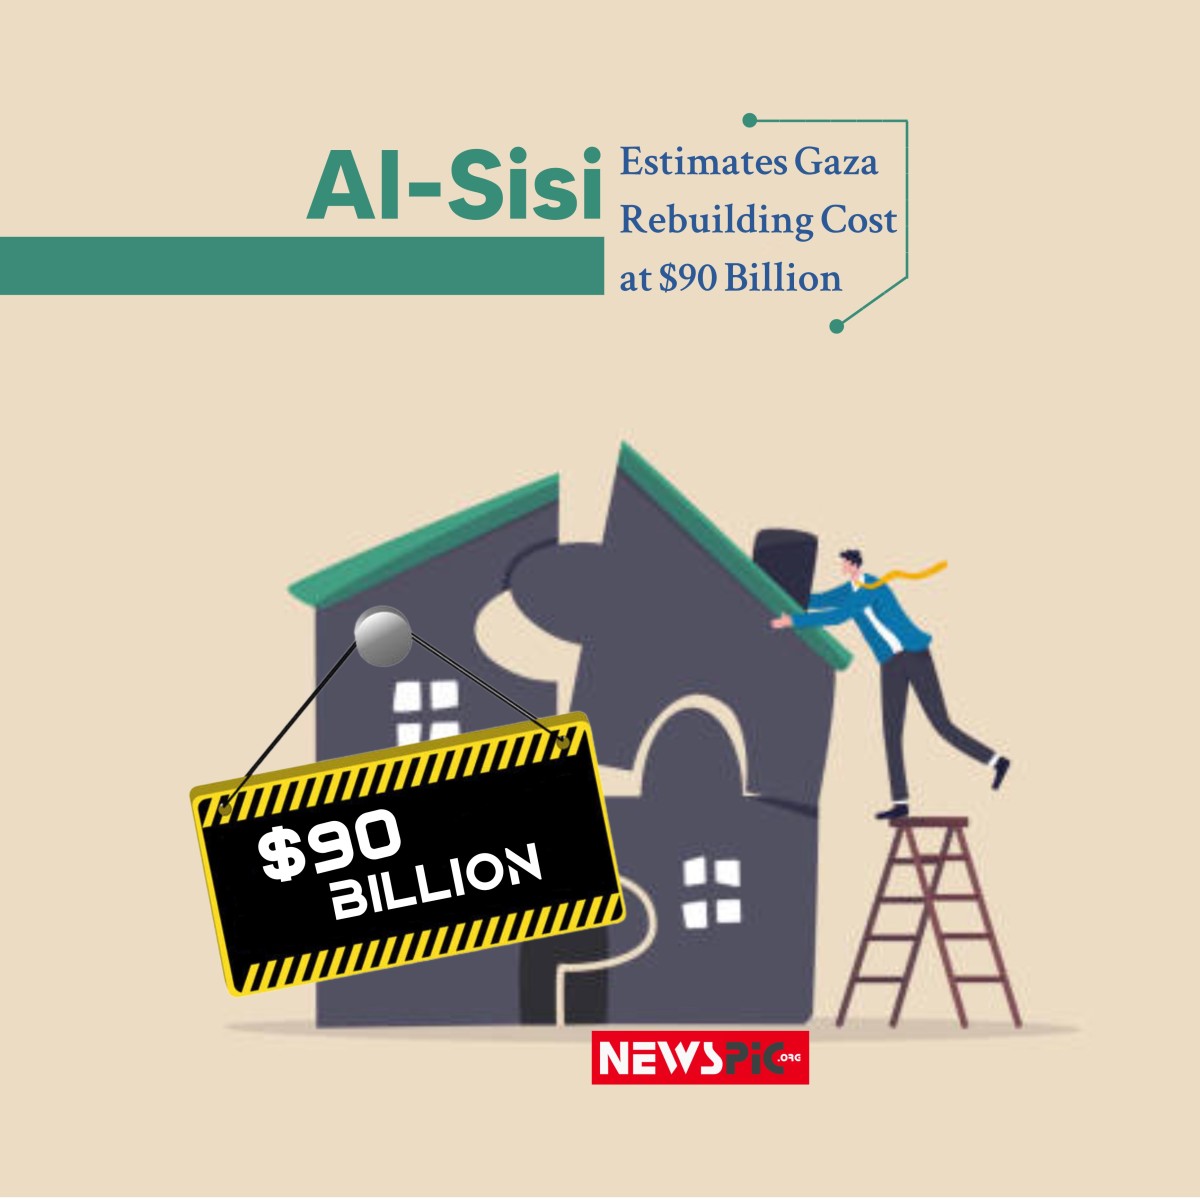 Al-Sisi Estimates Gaza Rebuilding Cost at $90 Billion